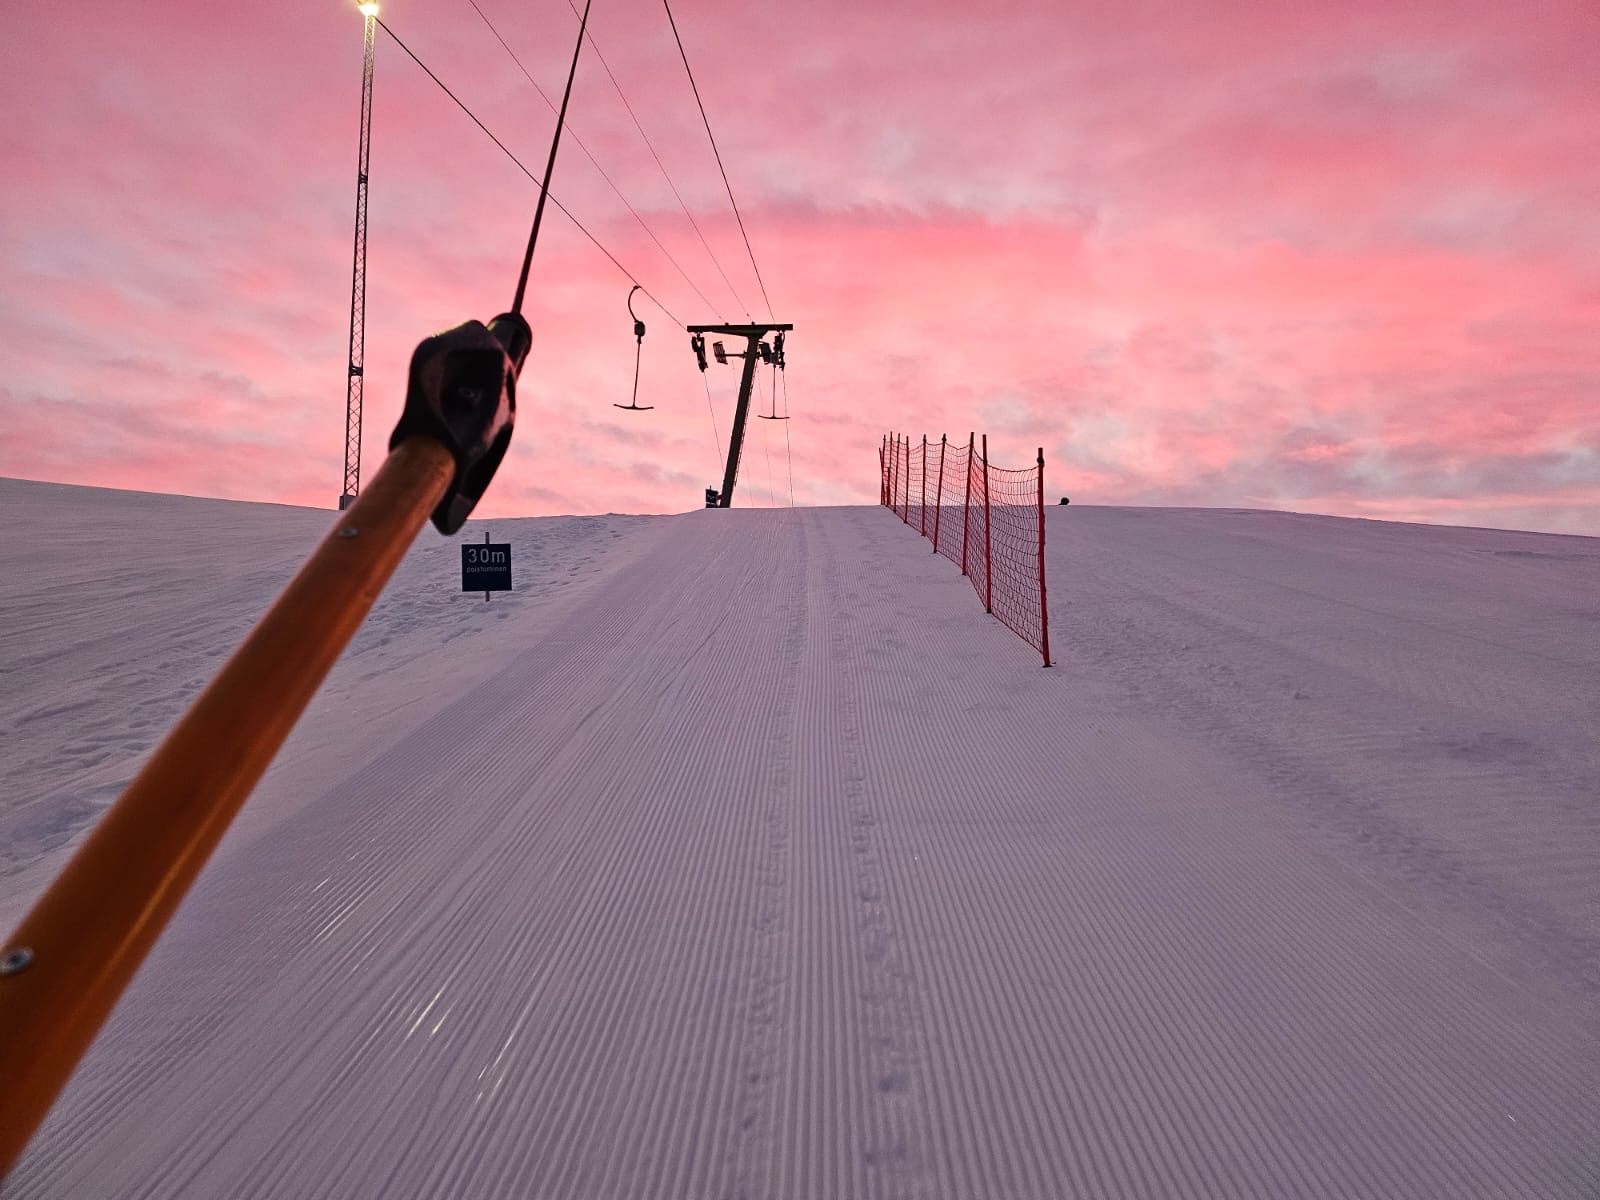 The sunset on a ski slope 